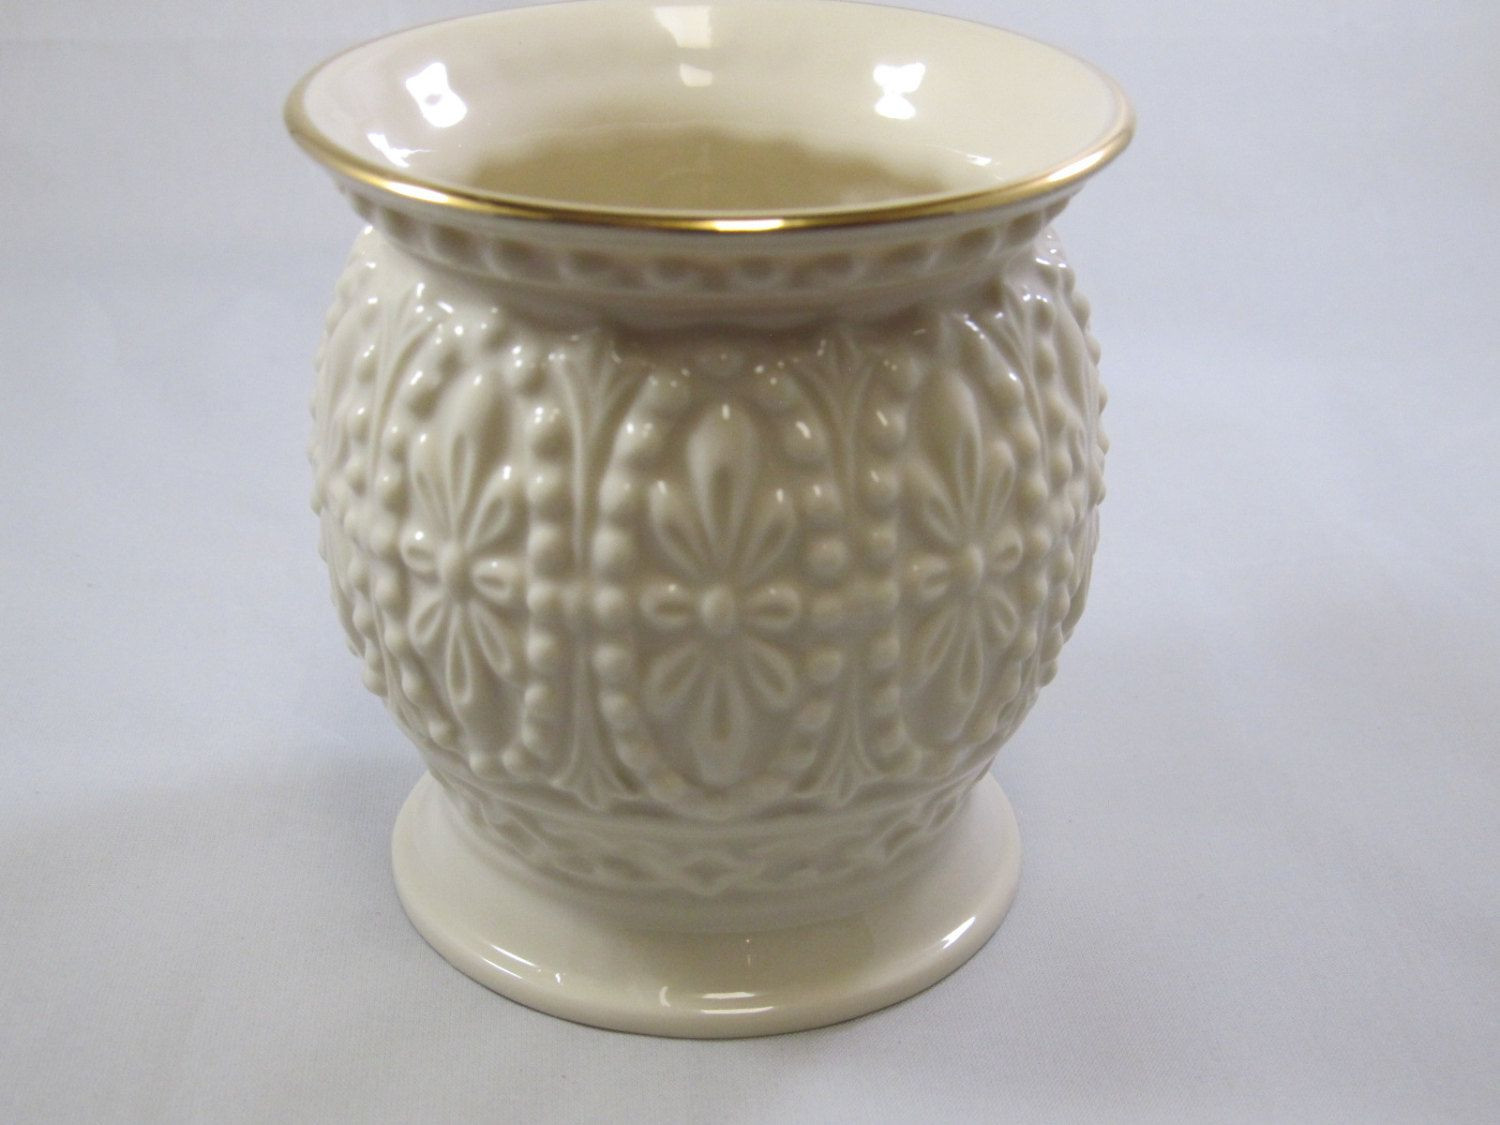 tiffany vase ebay of lenox ivory porcelain vase 24k gold trim bud vase fine china inside lenox ivory porcelain vase 24k gold trim bud vase fine china small bud vase china vase bumpy details